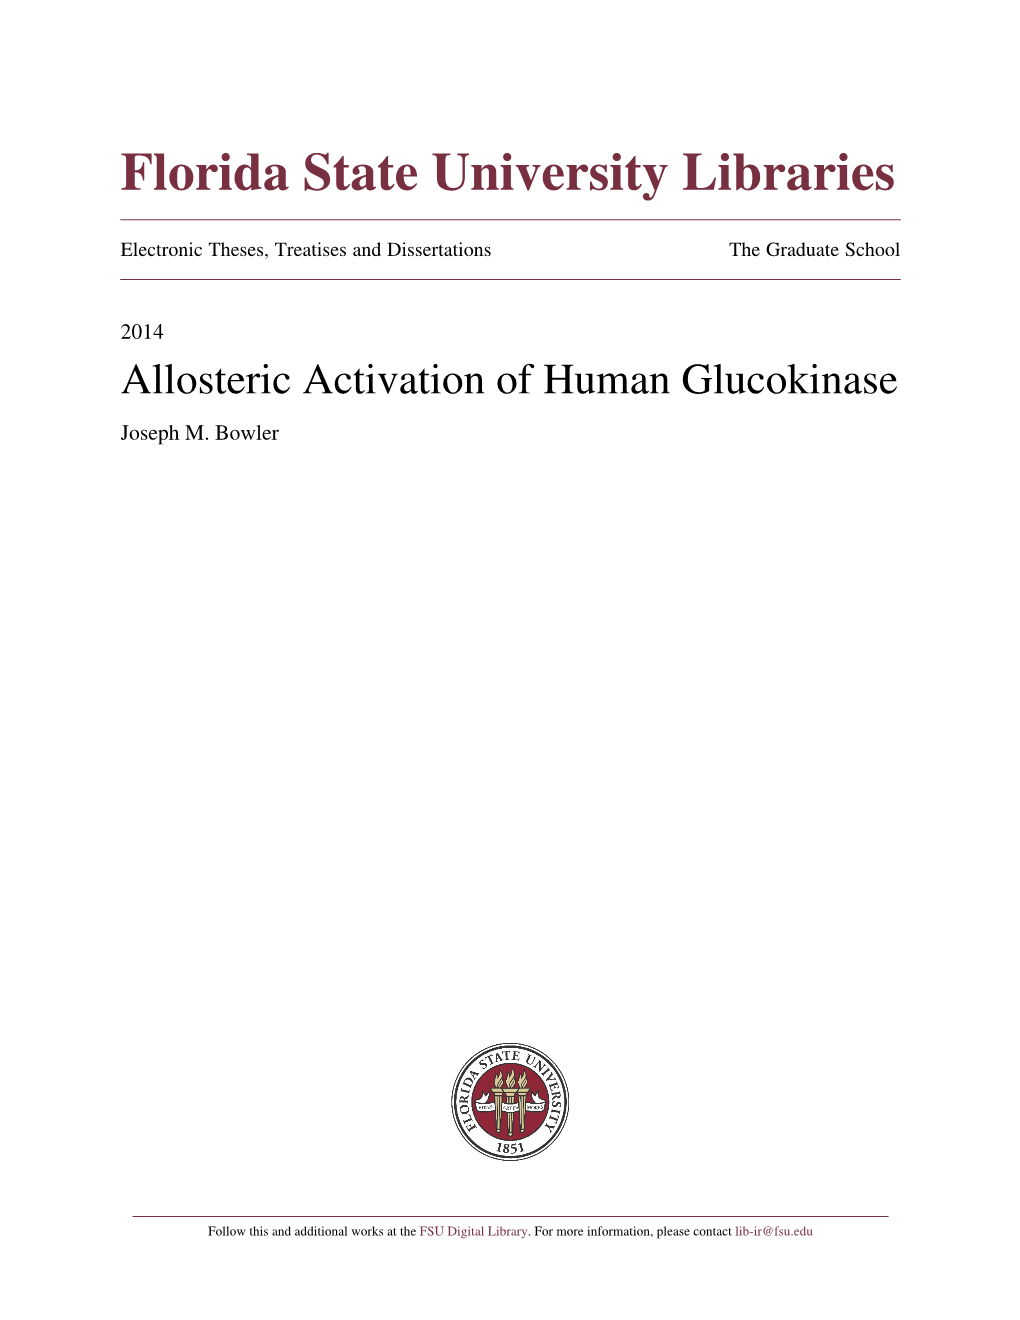 Allosteric Activation of Human Glucokinase Joseph M